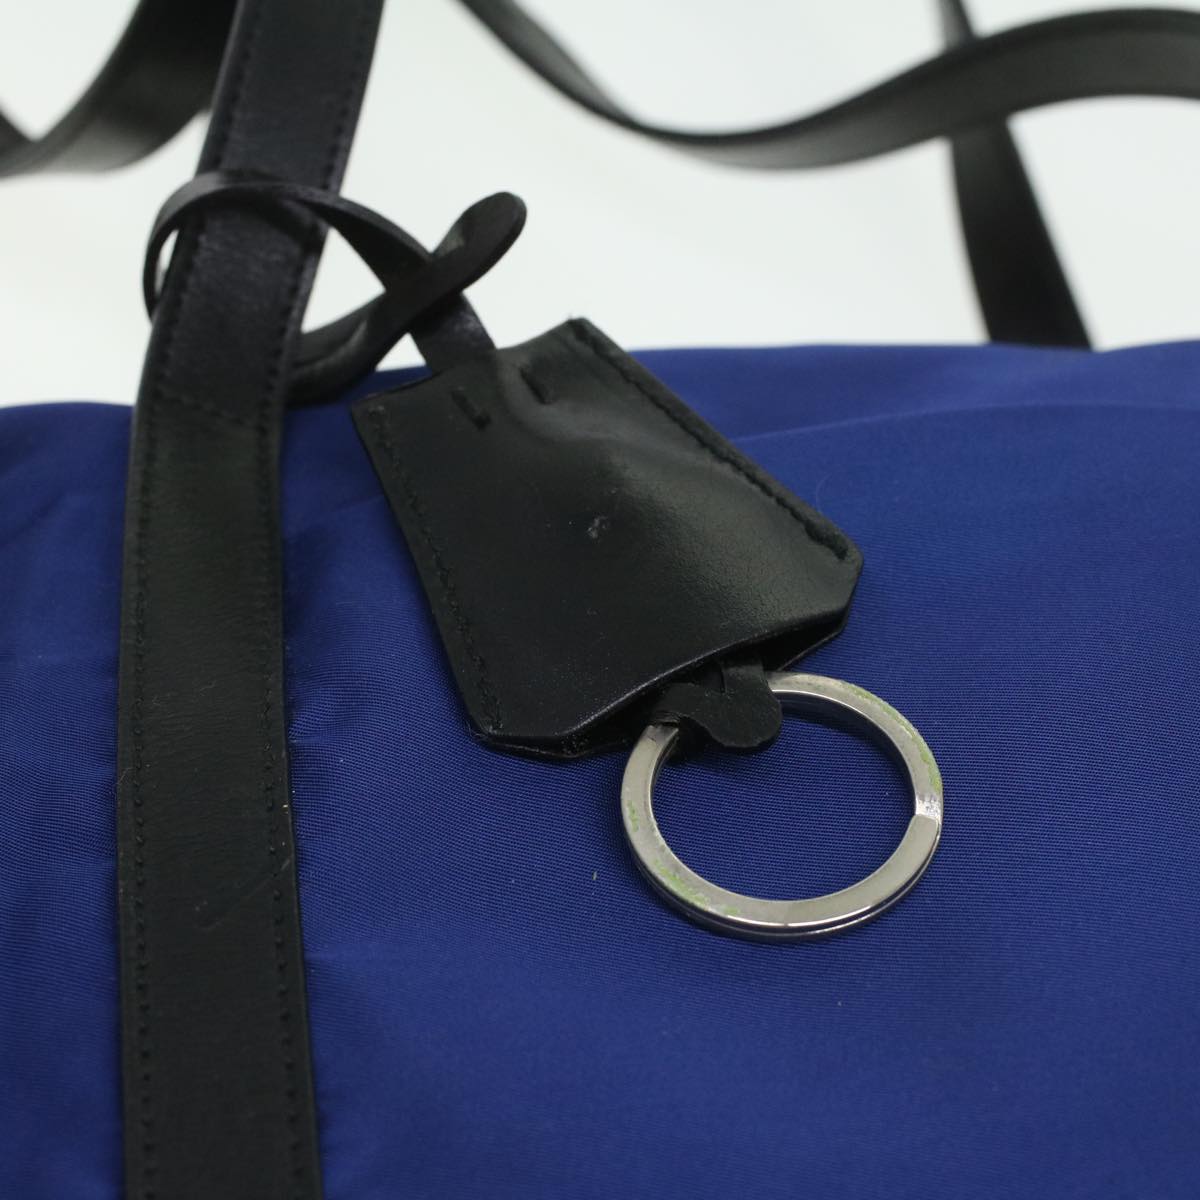 PRADA Tote Bag Nylon Blue Auth ep587